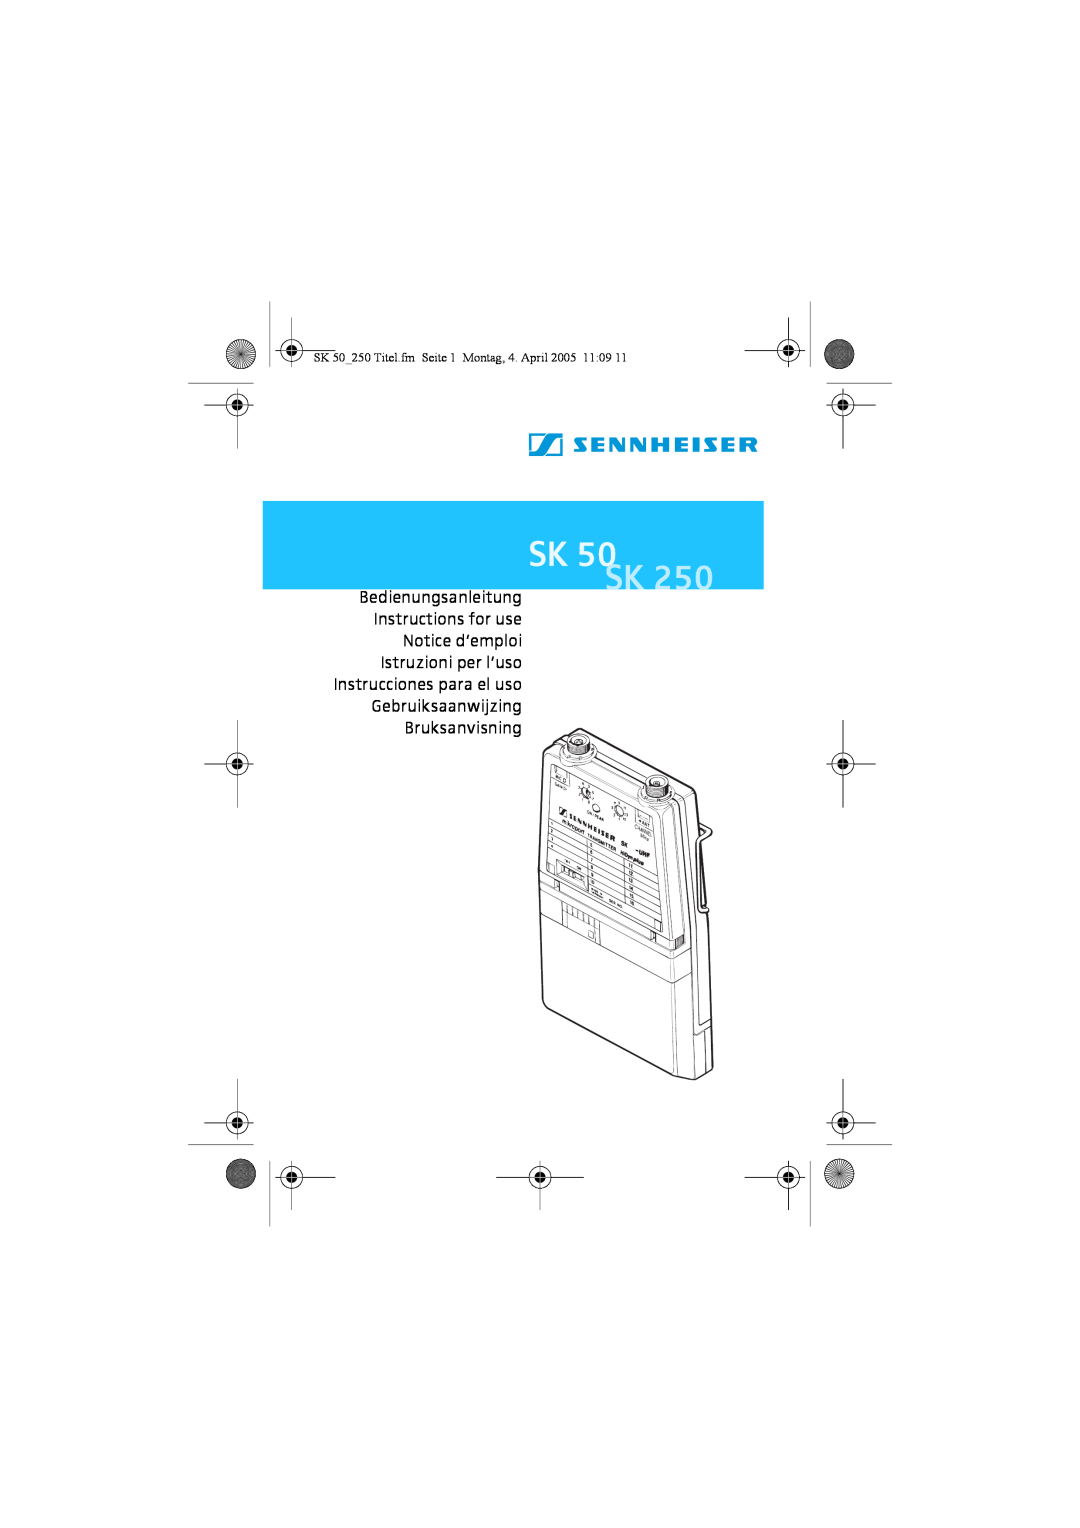 Sennheiser SK 250 manual Bedienungsanleitung Instructions for use, Notice d‘emploi Istruzioni per l‘uso, Bruksanvisning 